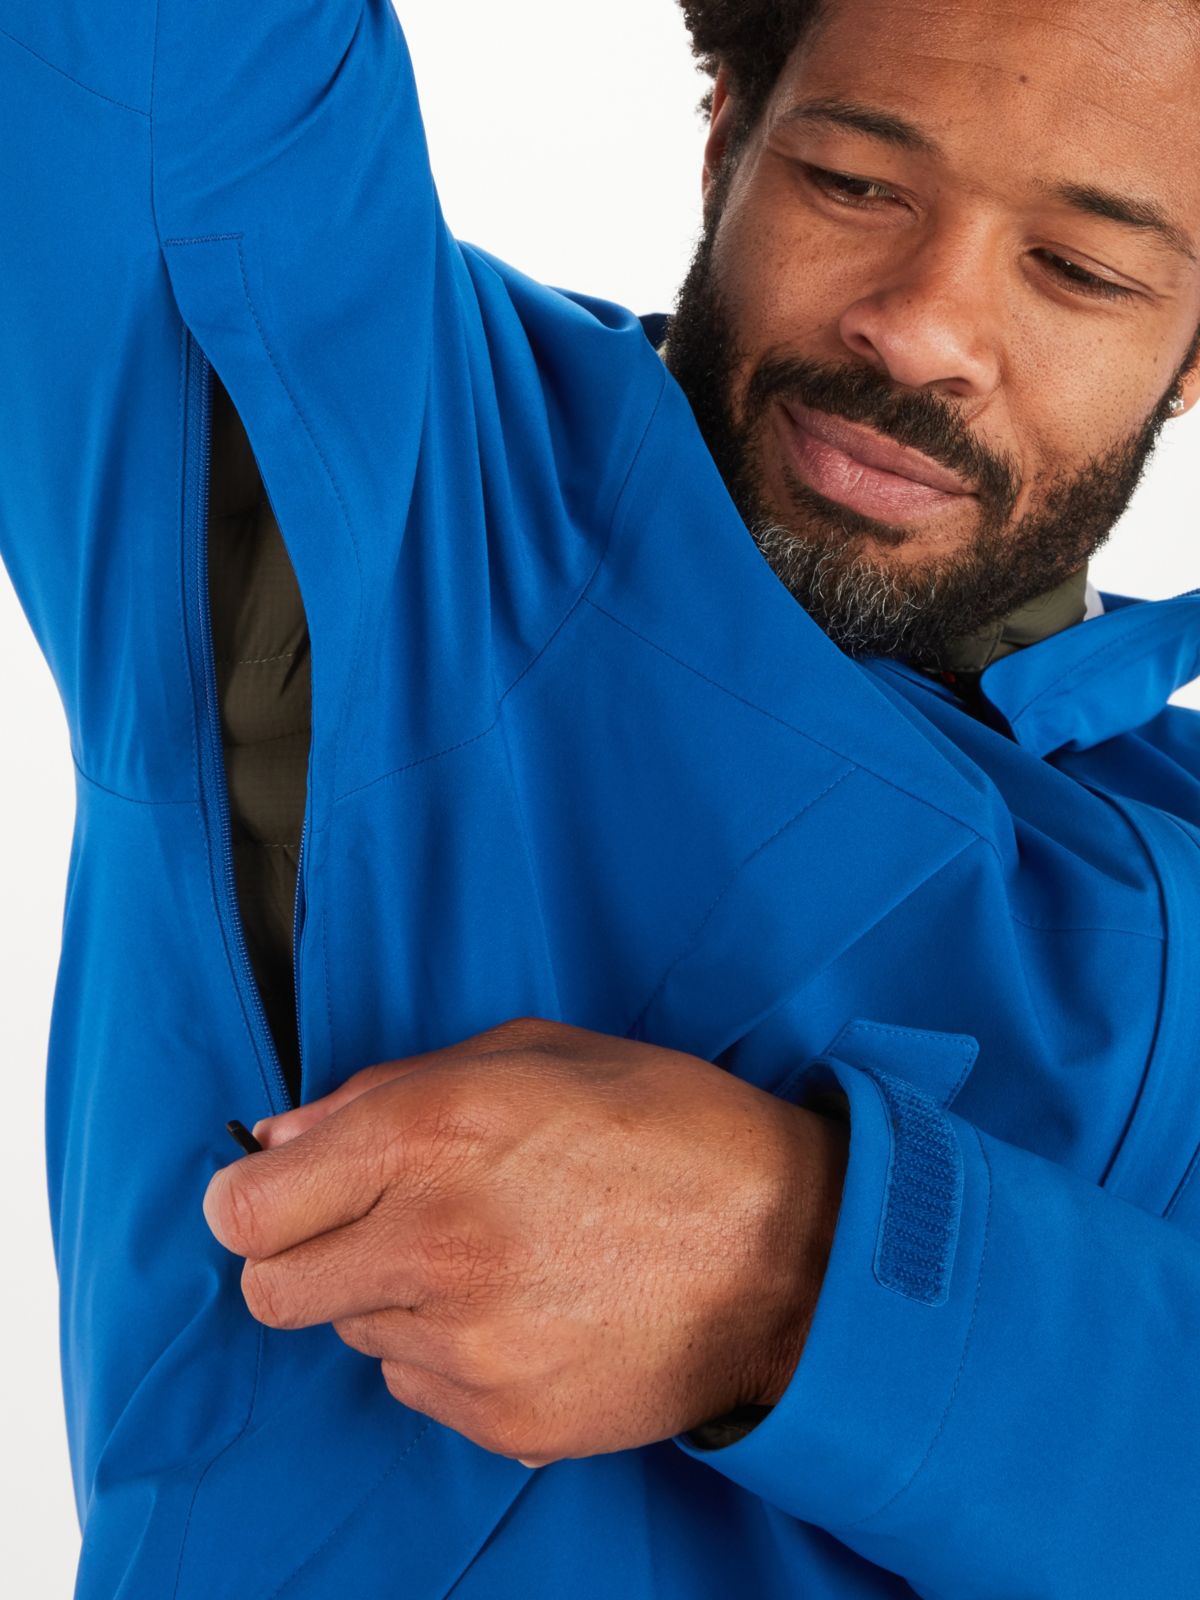 armpit zip pockets for ventilation